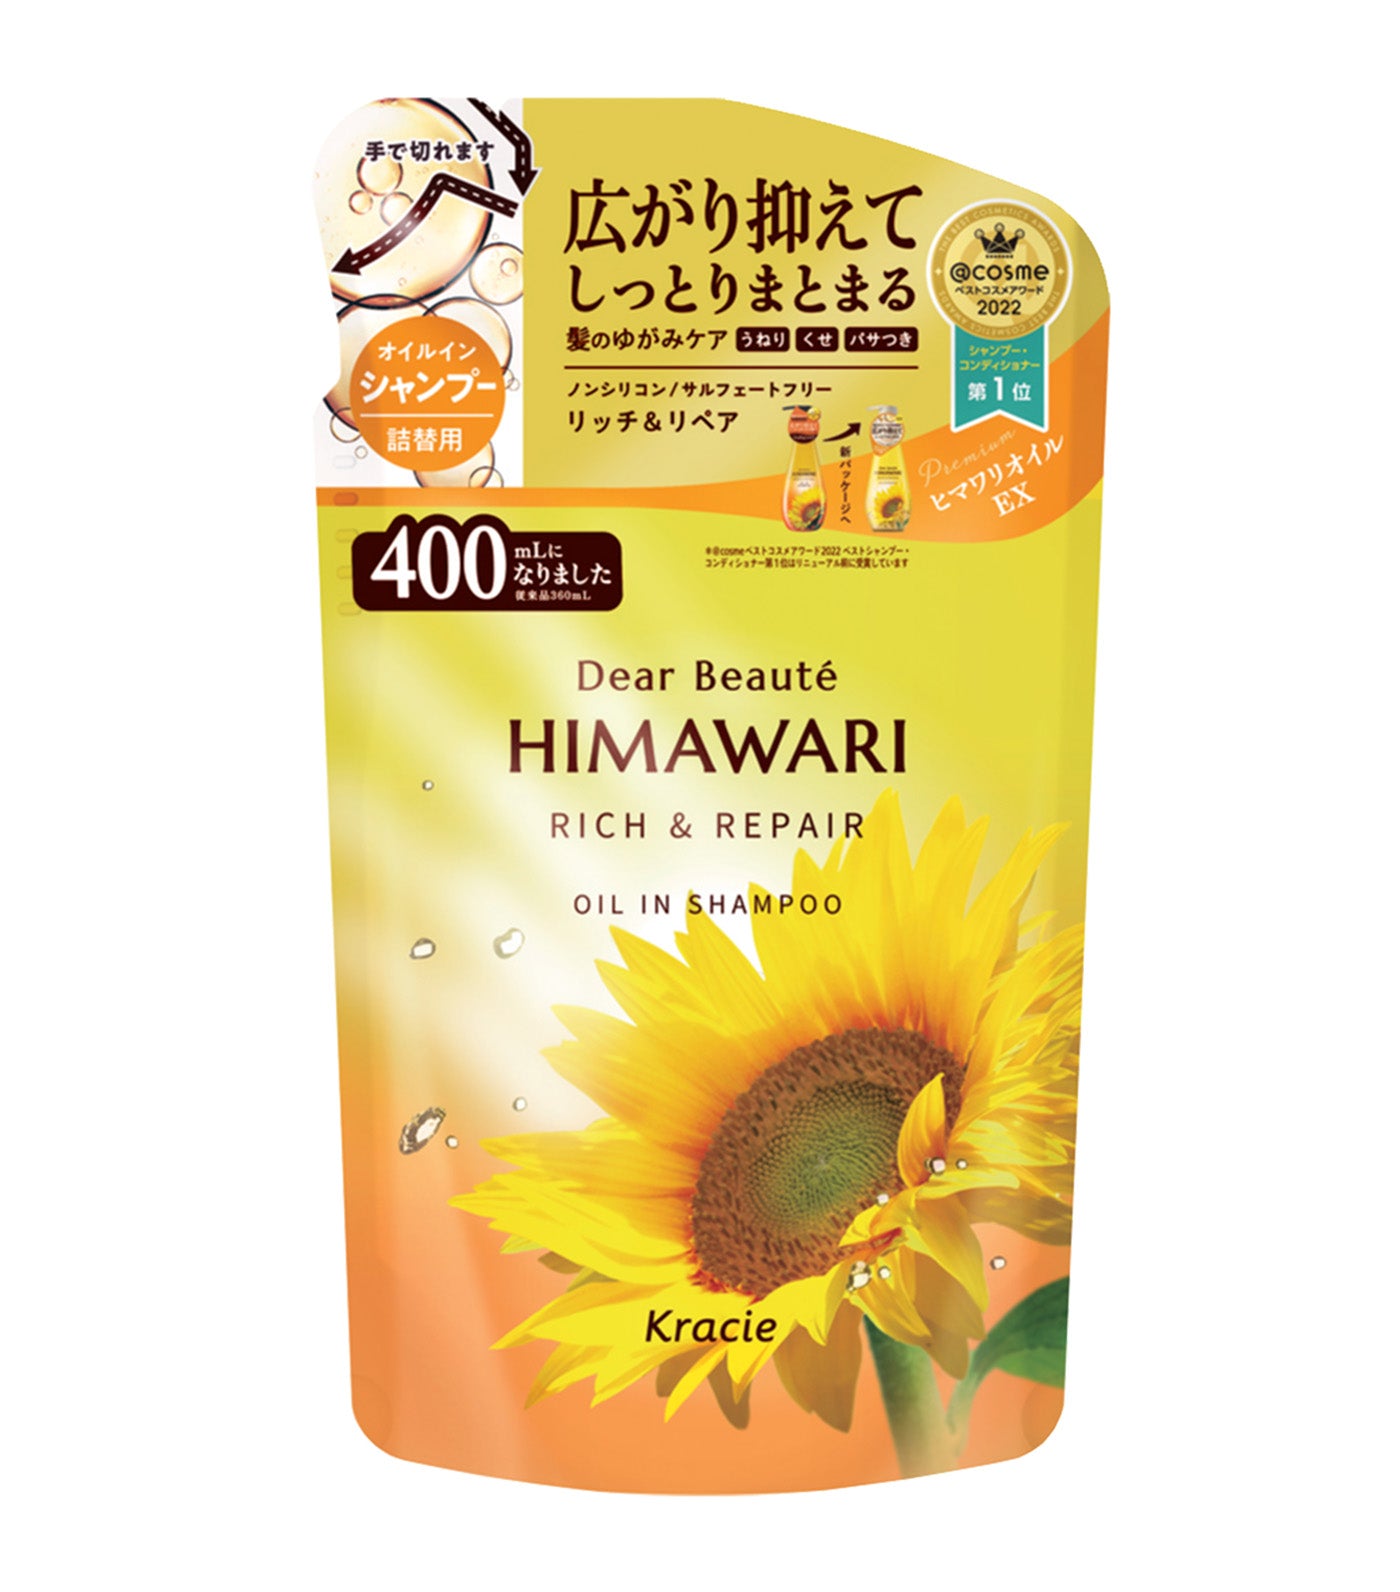 Dear Beaute Himawari Rich & Repair Oil In Shampoo Refill Pack